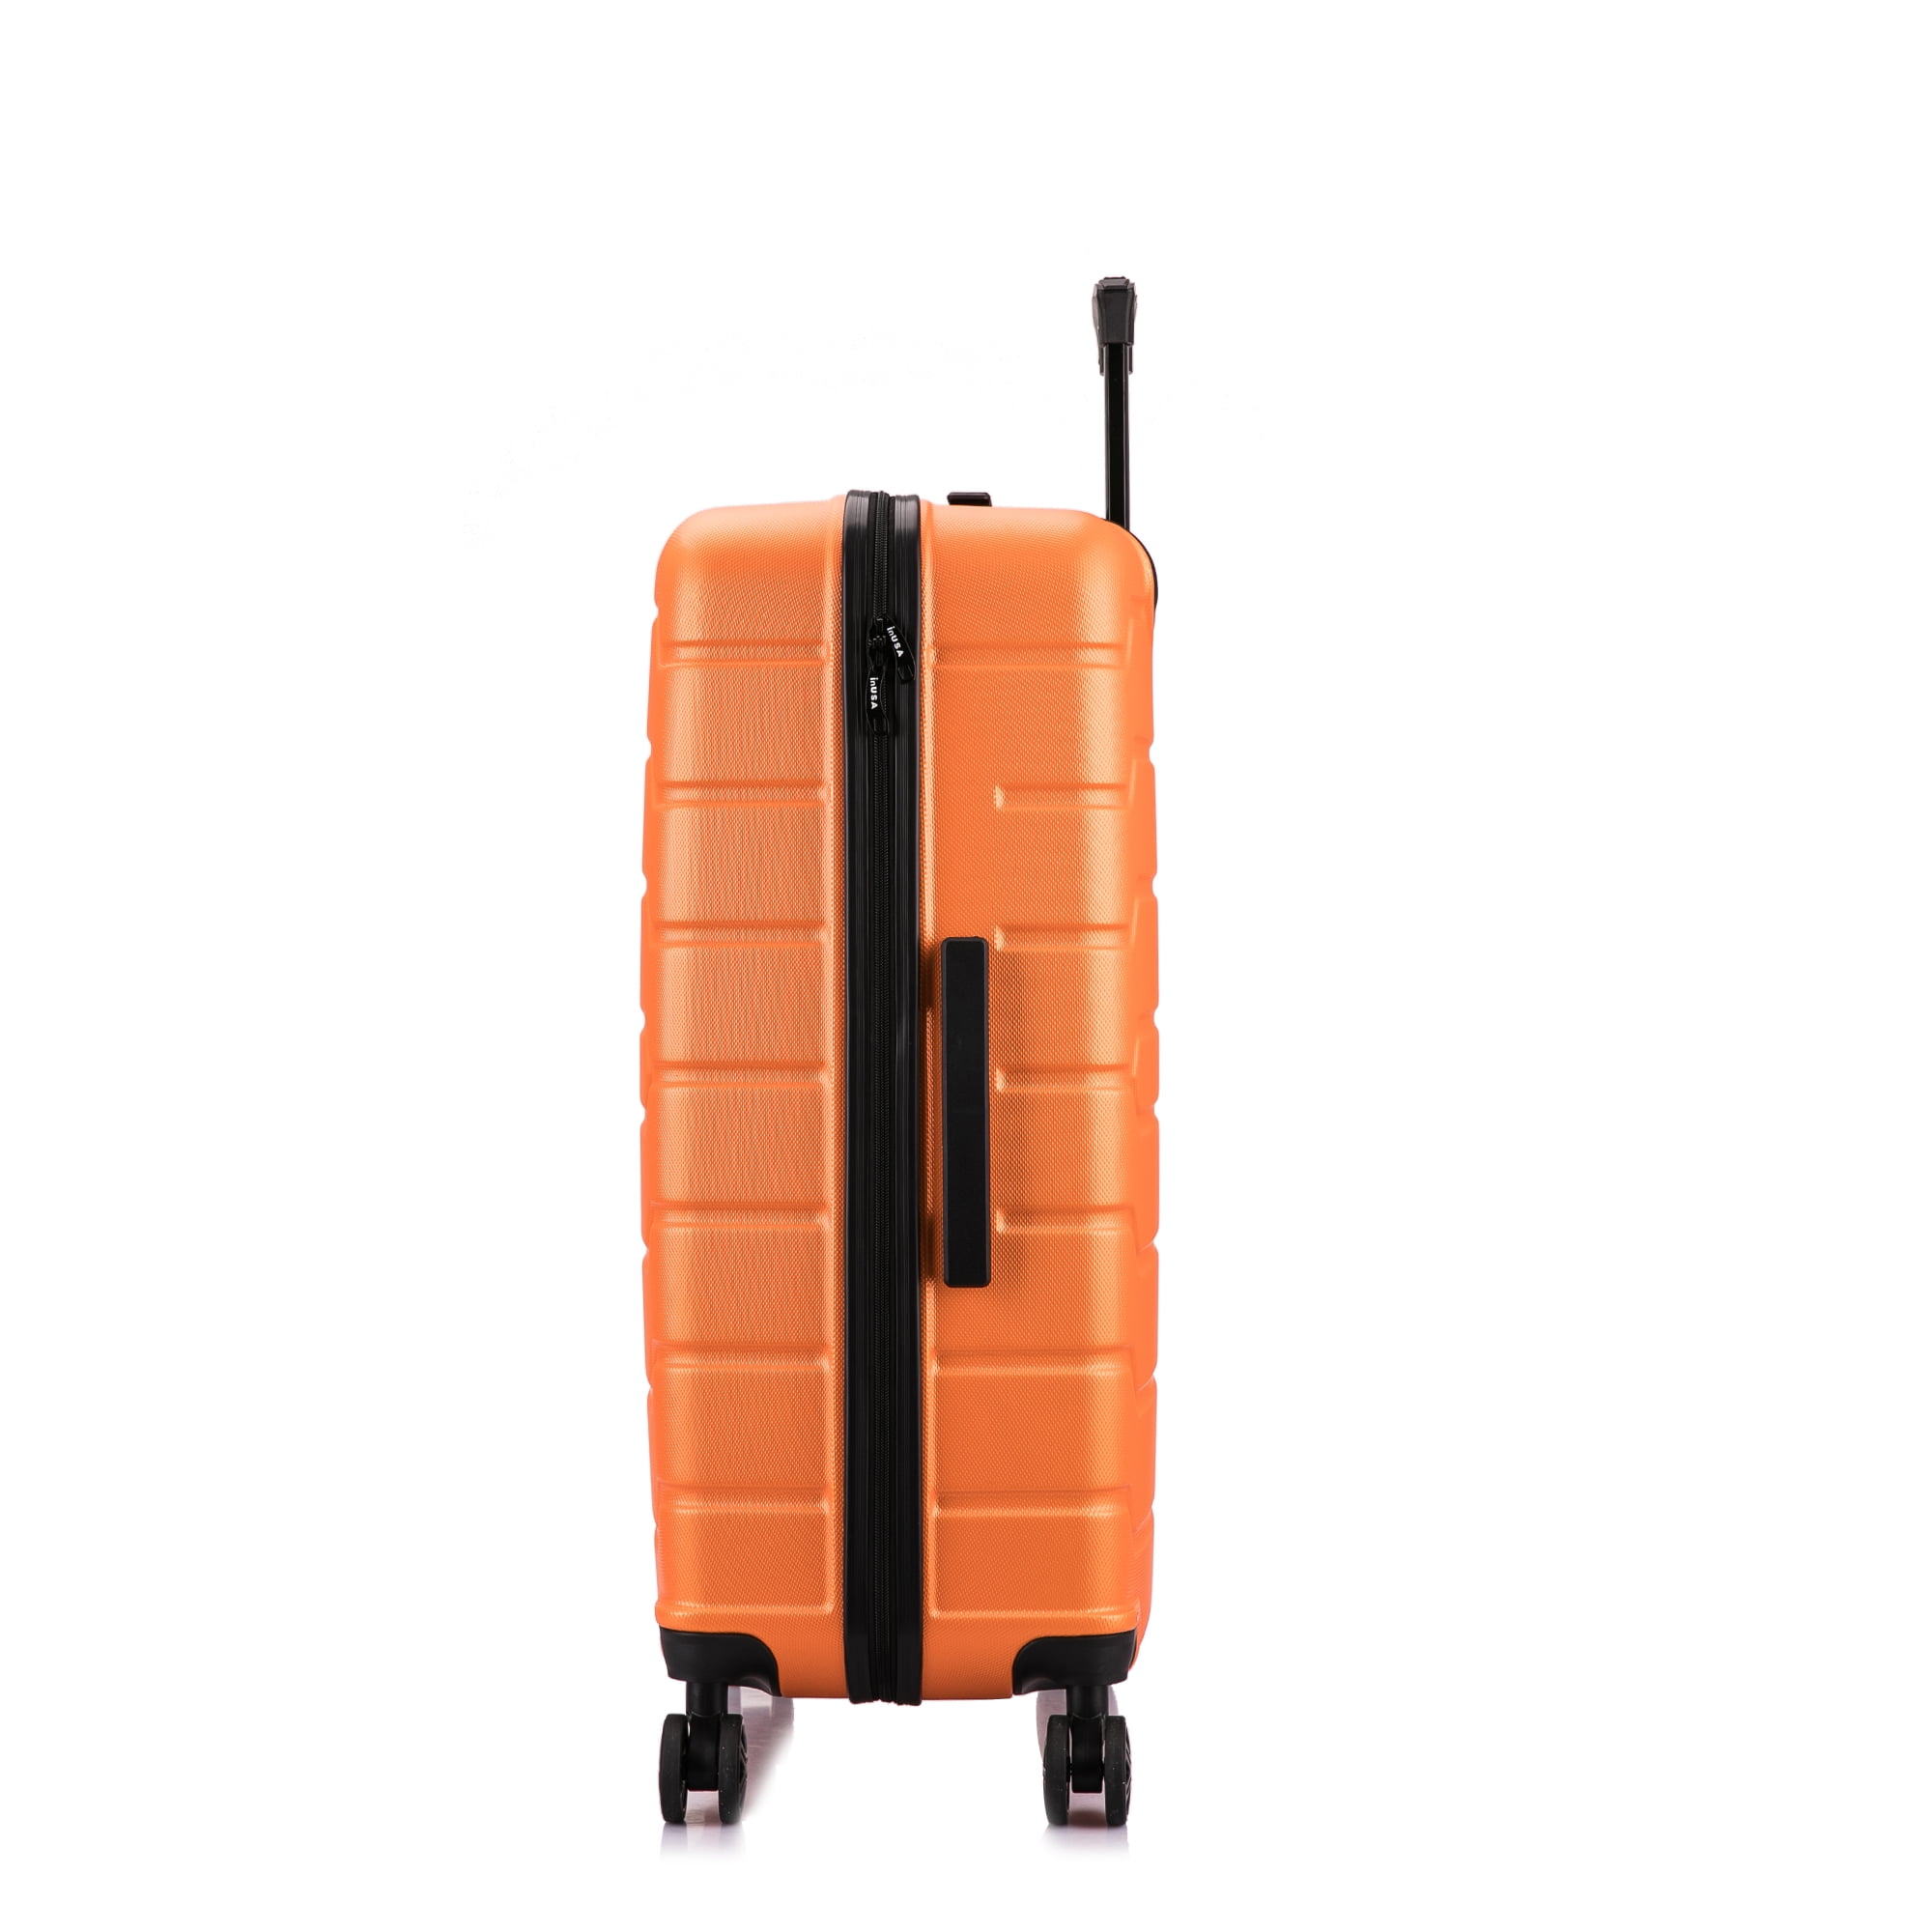 Inusa Trend Lightweight Hardside Spinner Luggage Set, 3 Piece - White